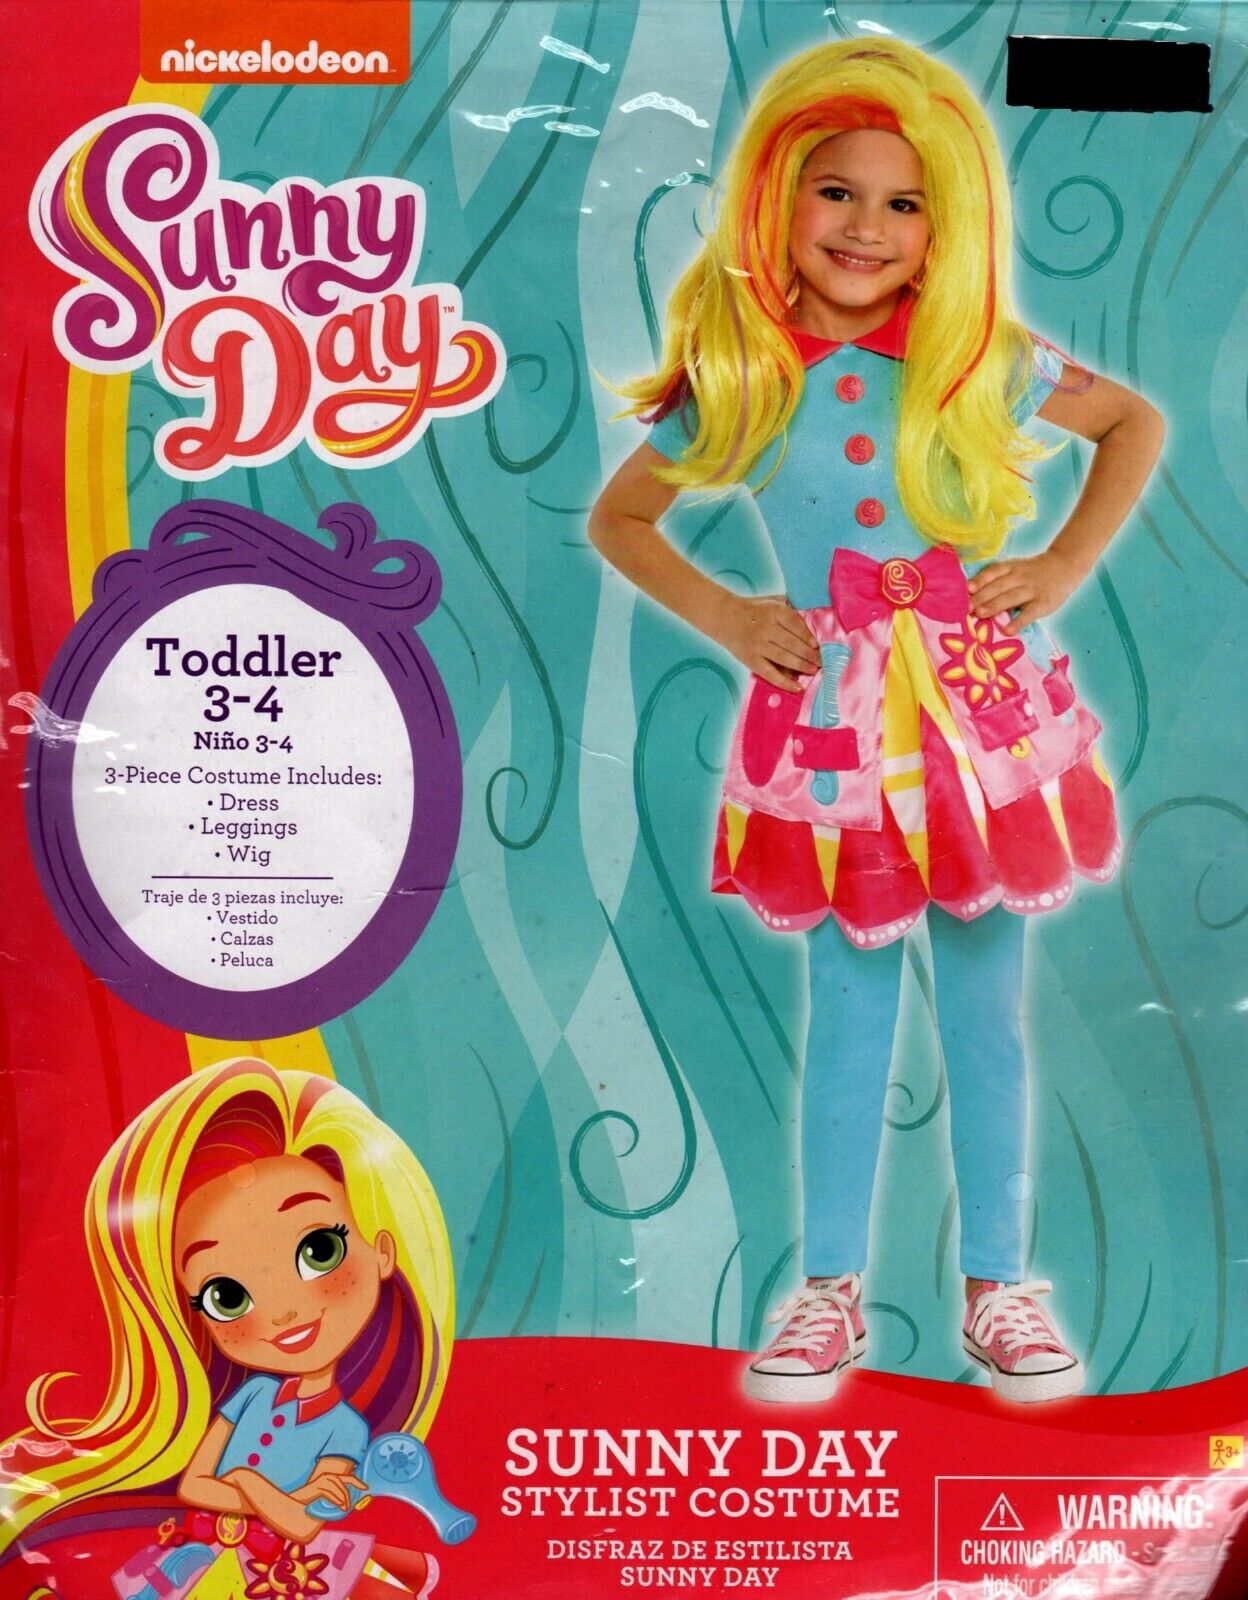 Nickelodeon Sunny Day stylist costume Halloween Toddler 3-4